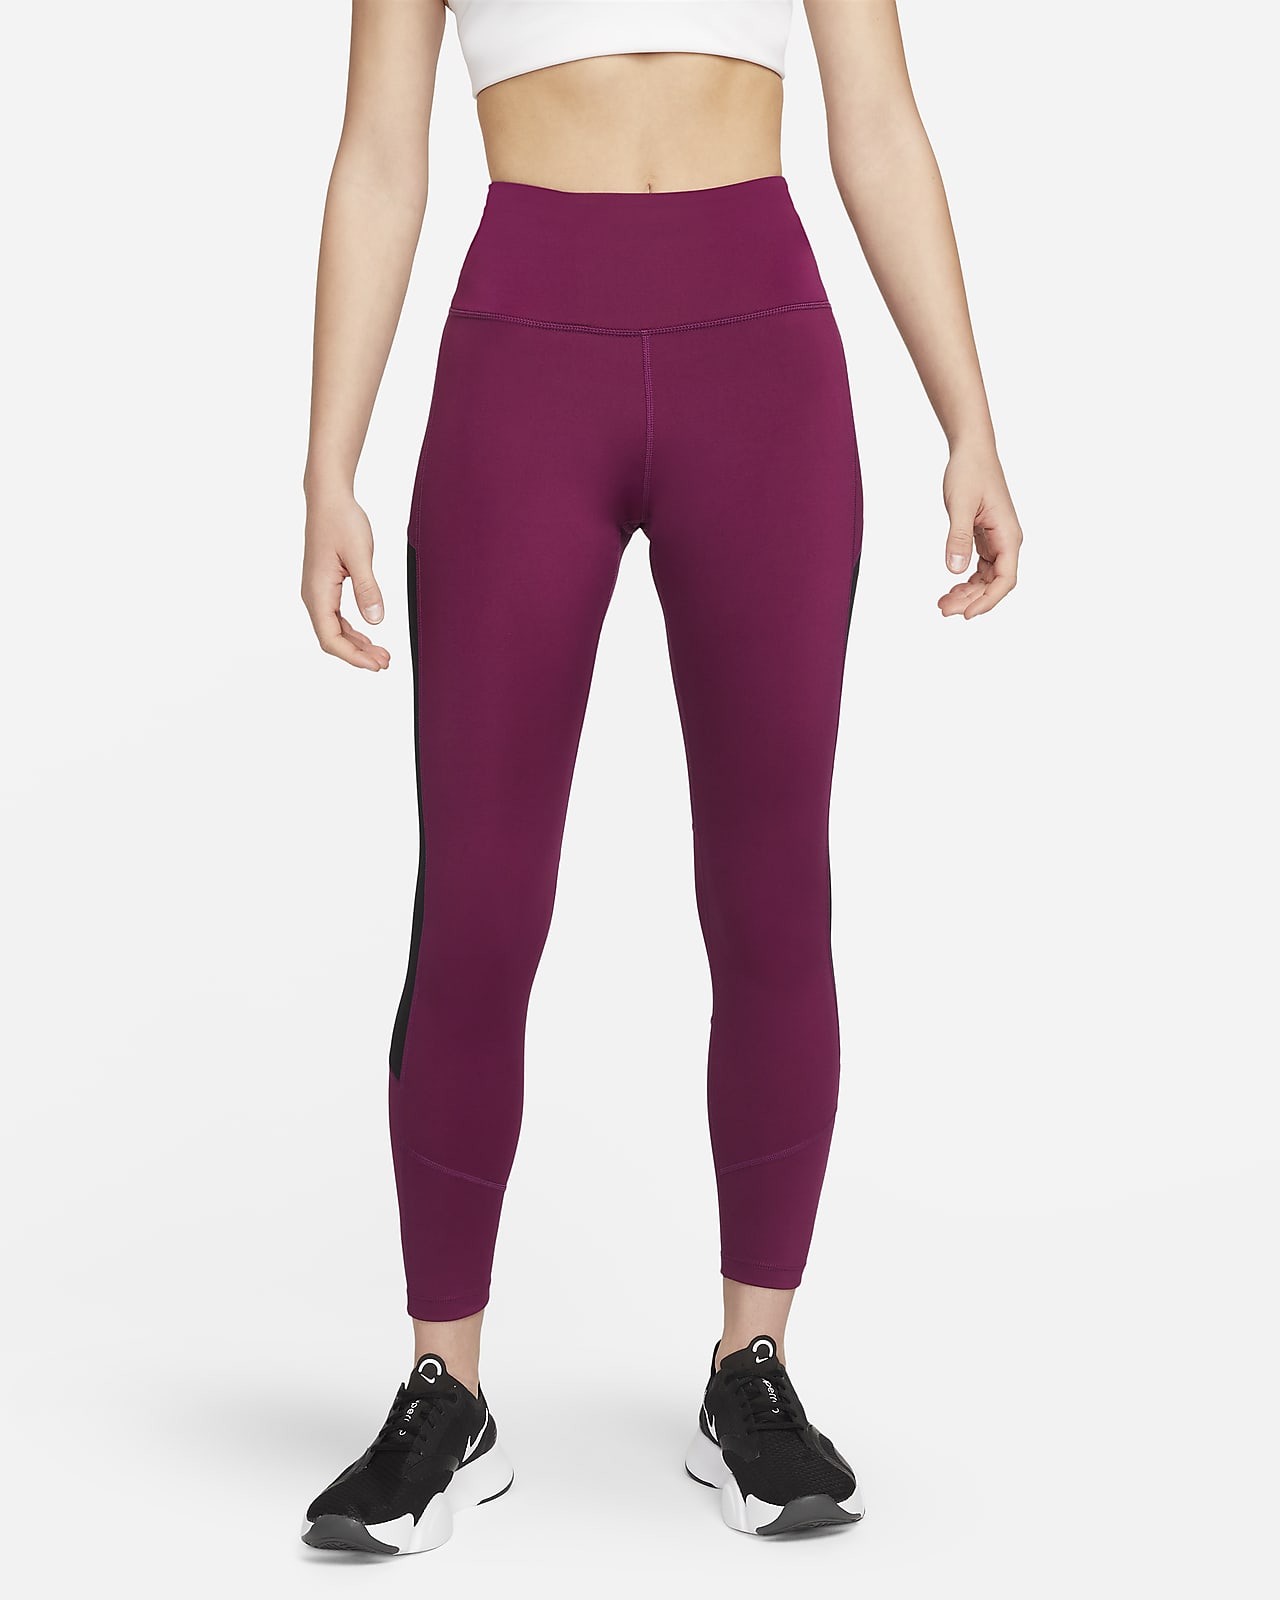 Legging de running 7/8 taille haute avec poches Nike Air pour femme